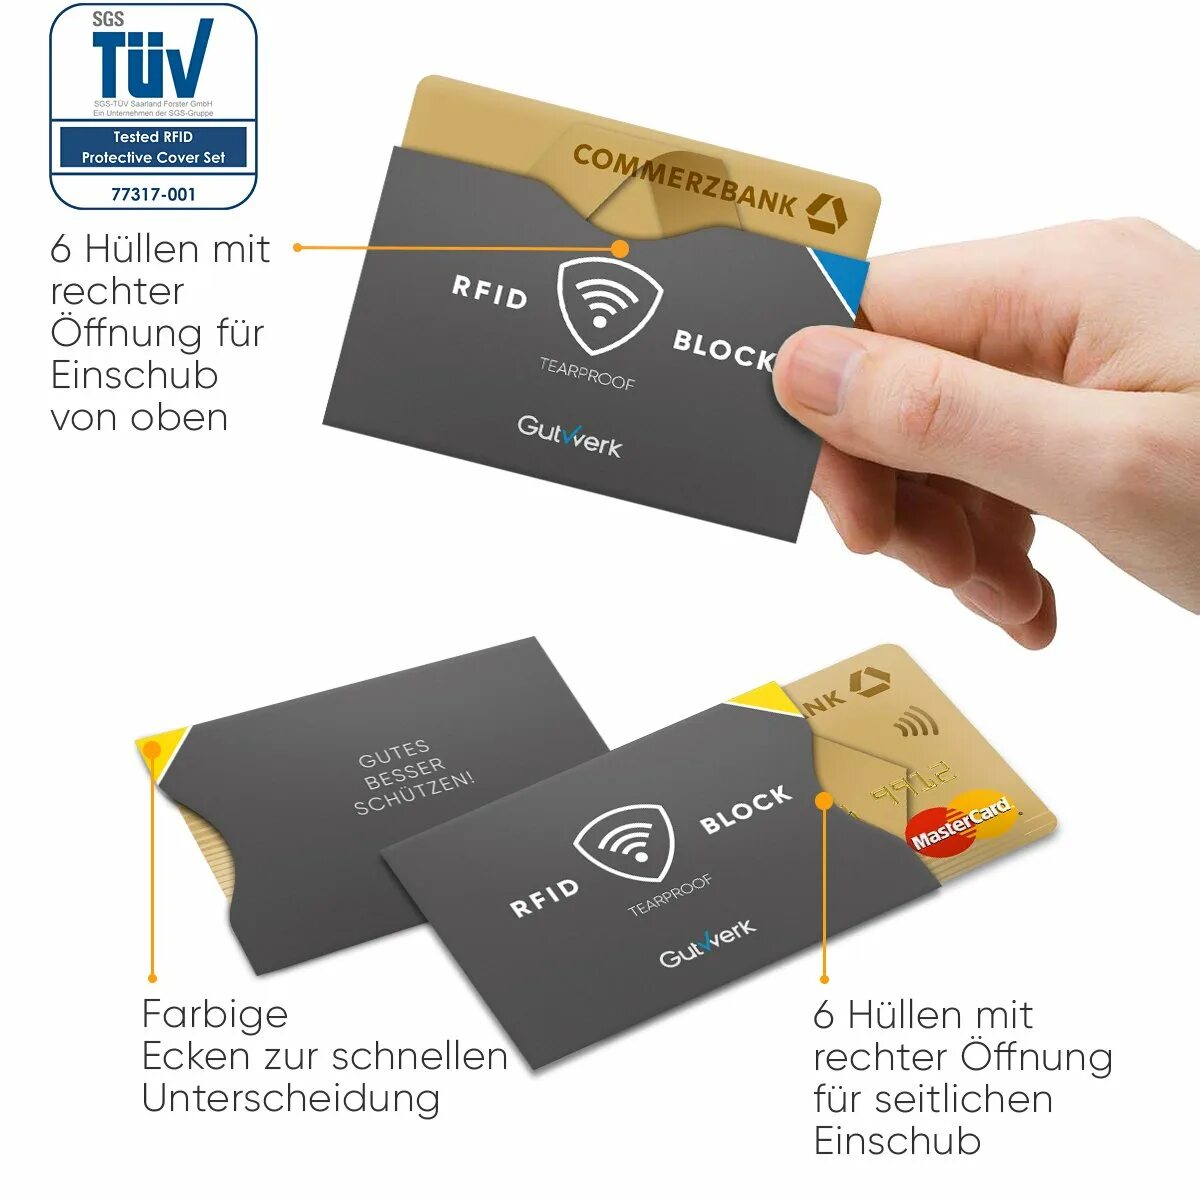 Nfc банковская карта. RFID-карта. Commerzbank карта. Commerzbank Card. Commerzbank Debit Card.